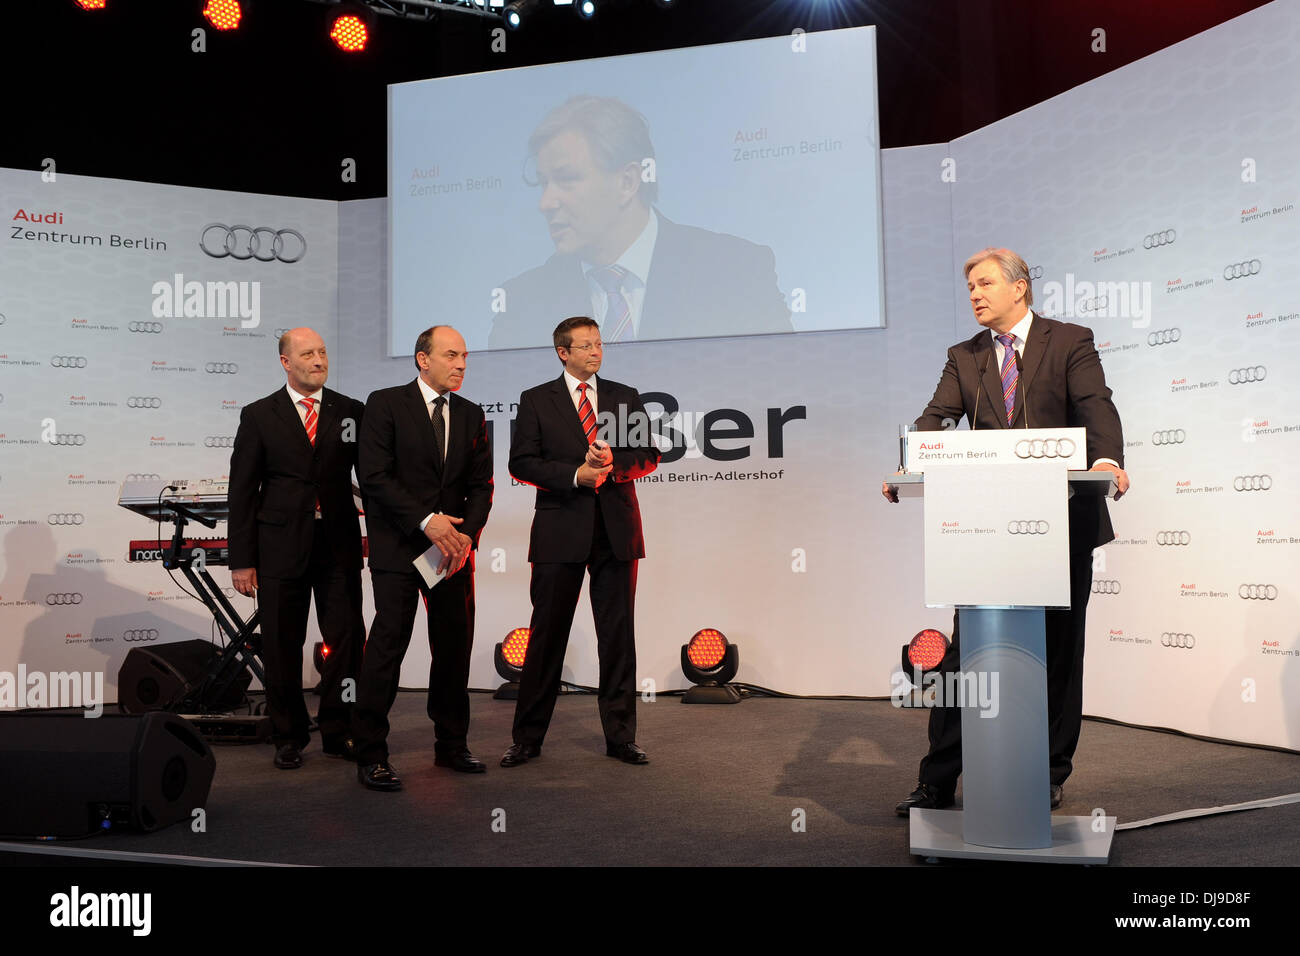 Andre Reiser, Ferdinand Schneider, Michael Renz and Klaus Wowereit attending Grand Opening of the Audi Zentrum Berlin-Adlershof. Berlin, Germany - 18.04.2012 Stock Photo